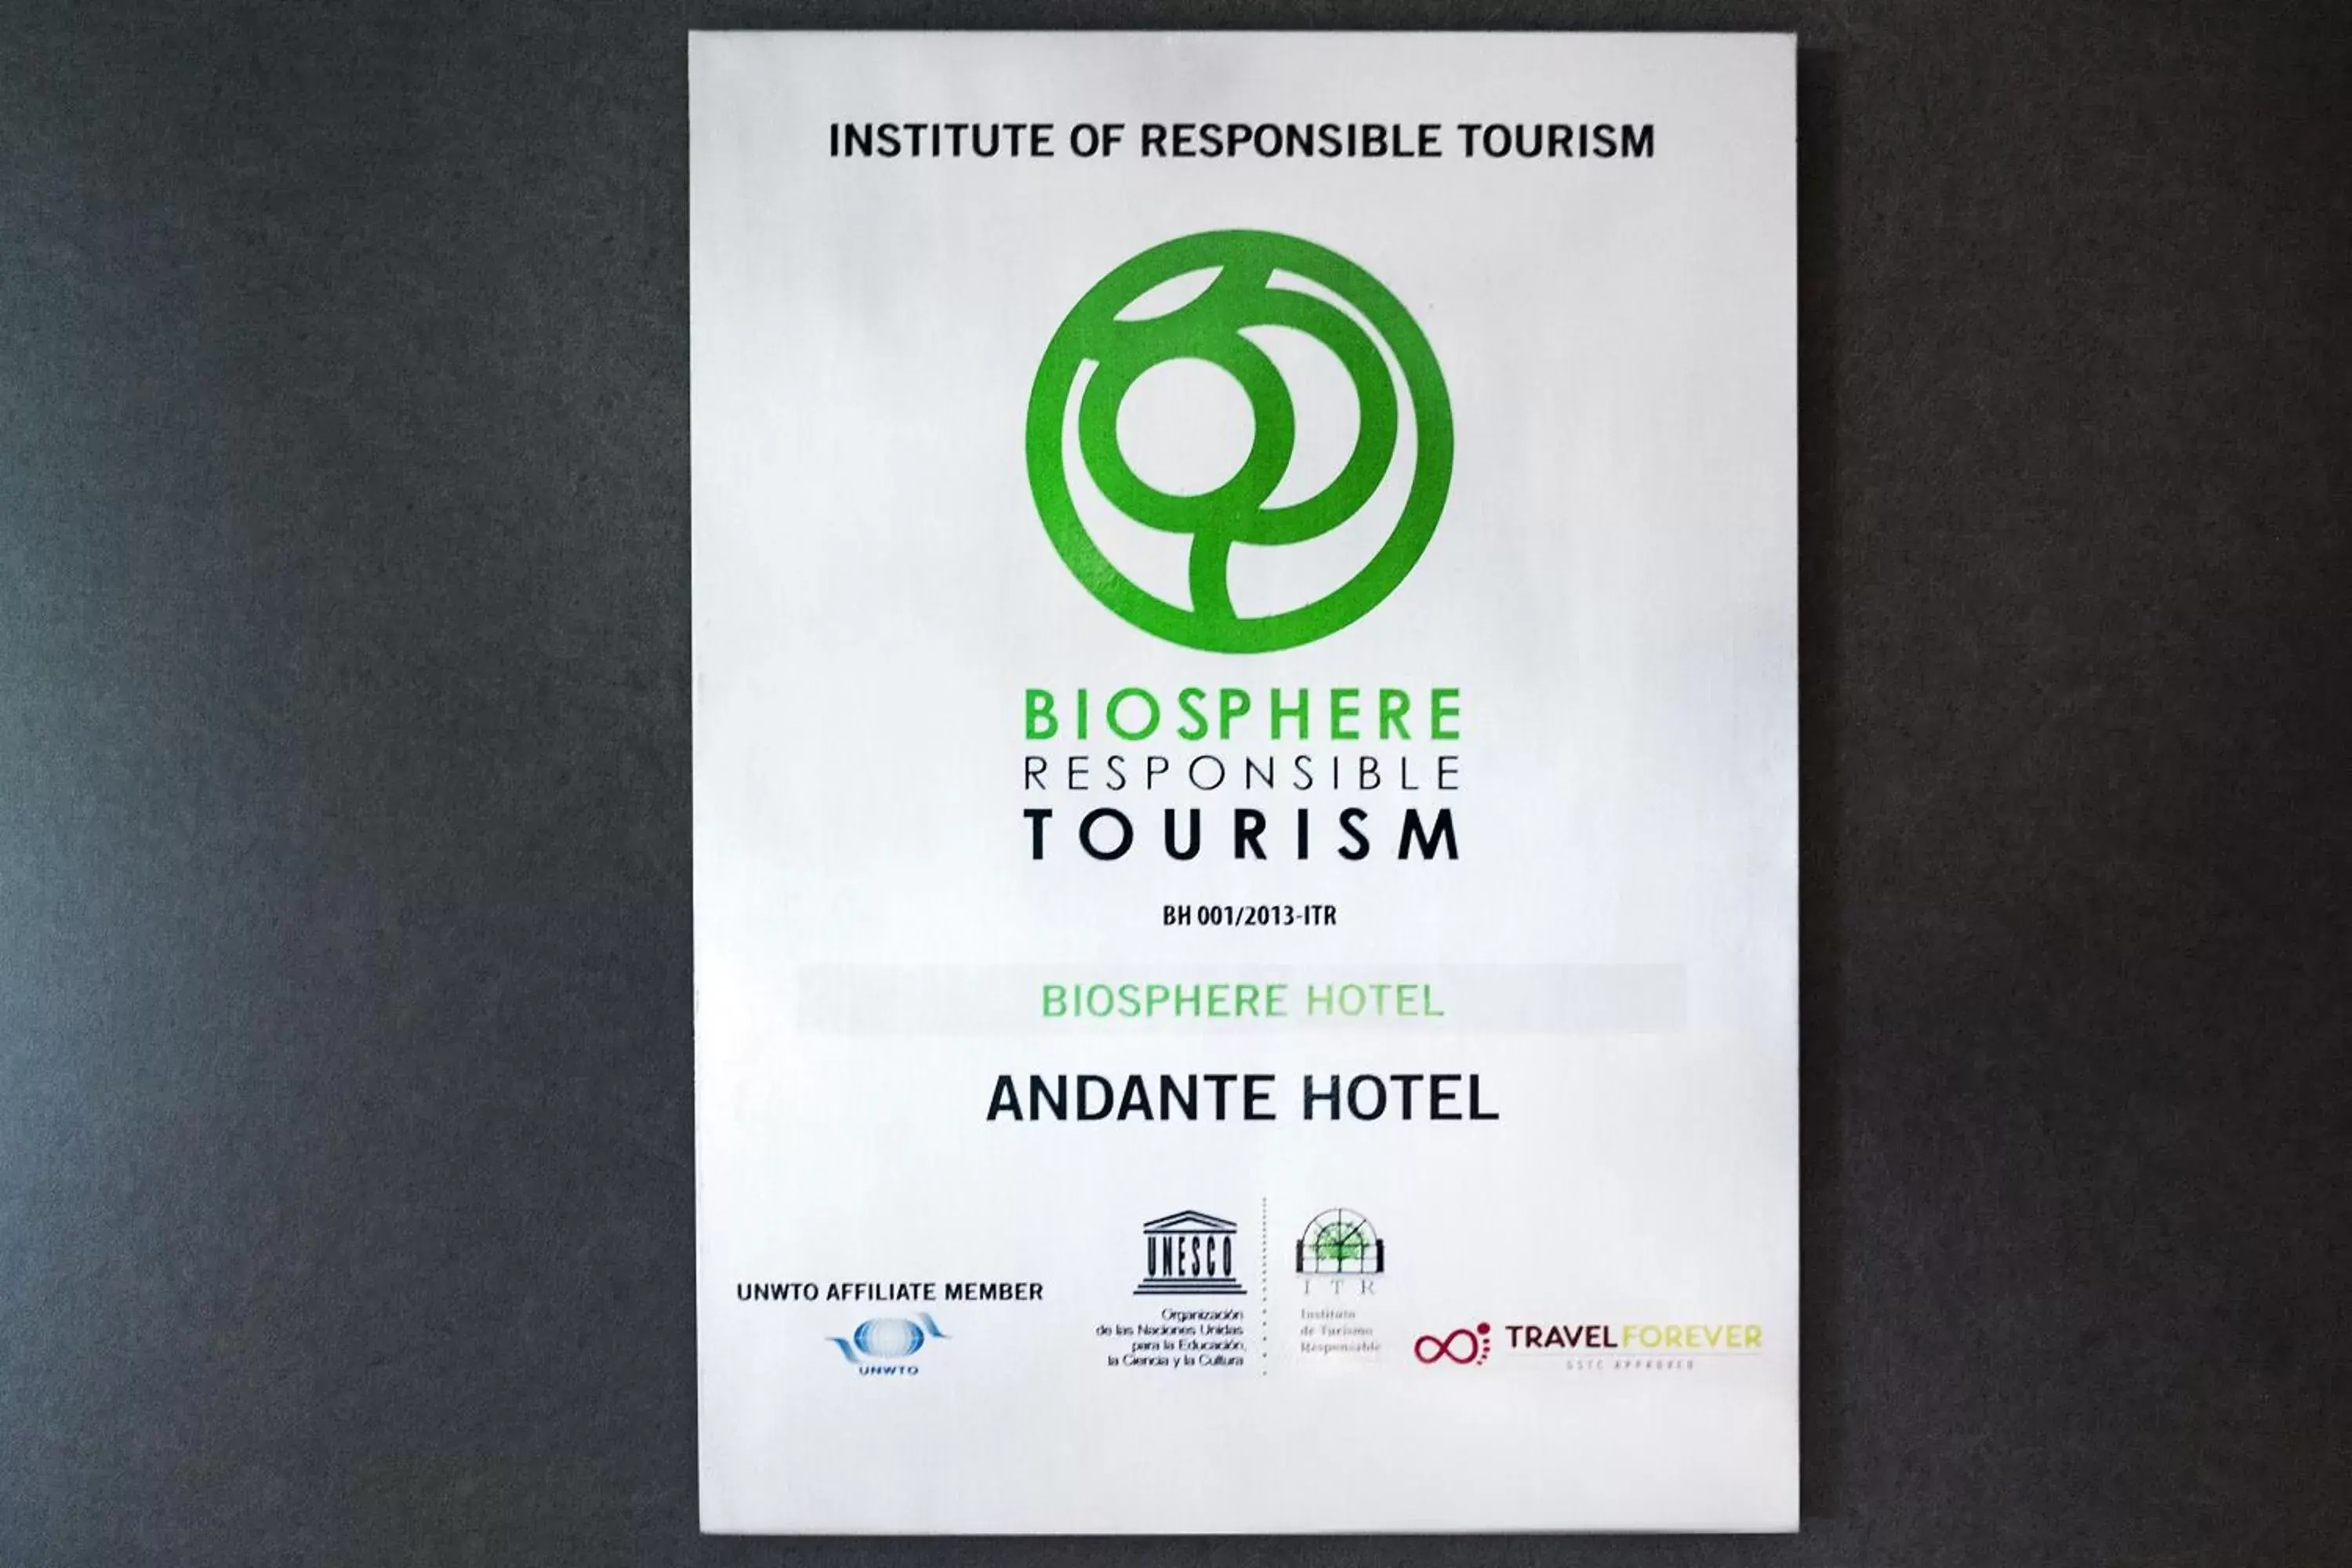 Certificate/Award in Andante Hotel